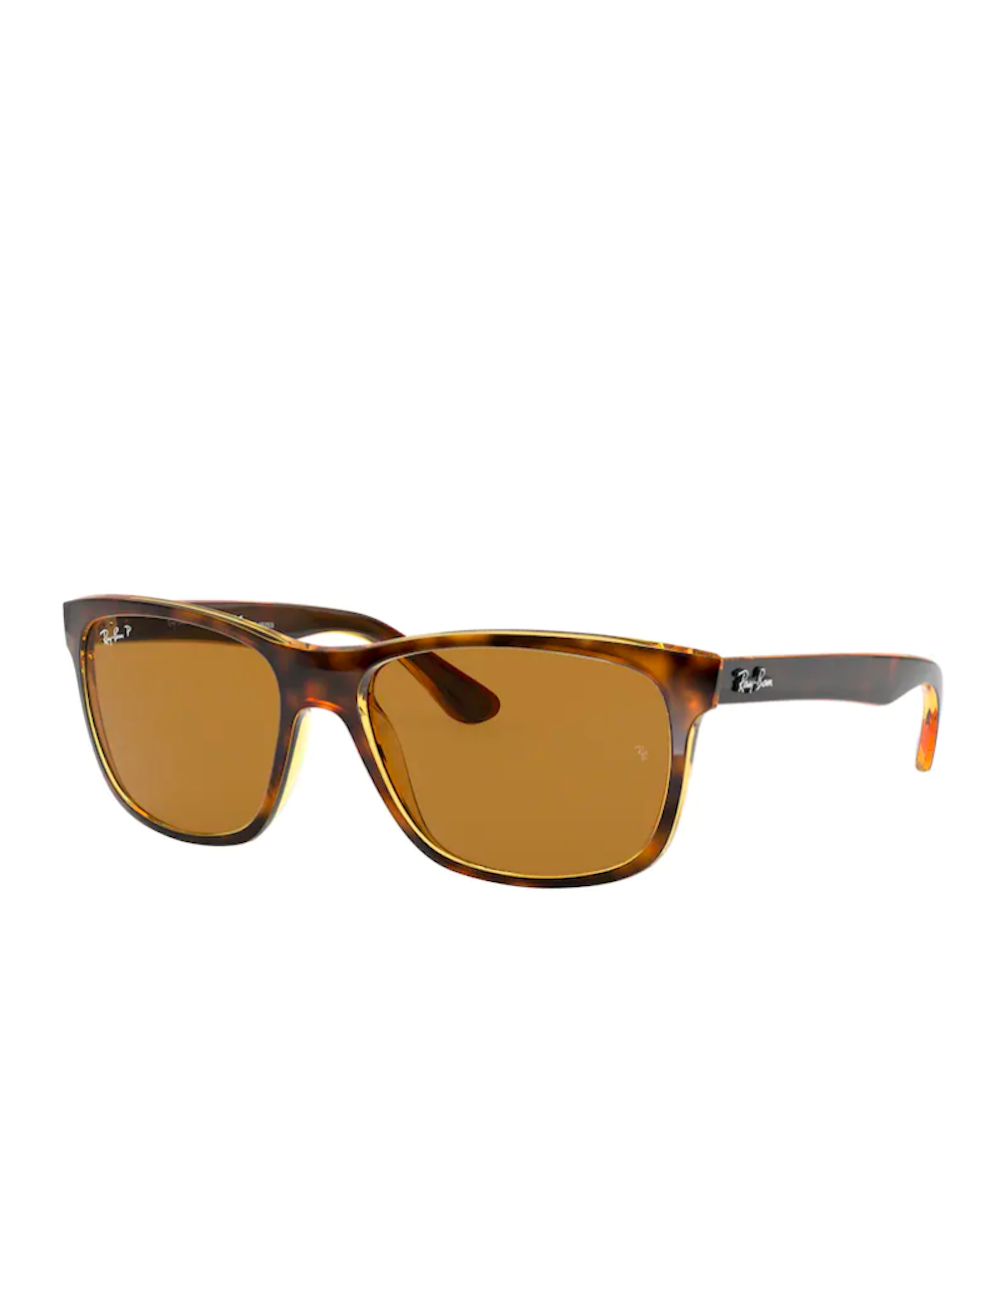 https://www.otticamauro.biz/30175-large_default/ray-ban-rb4181-men-polarized-sunglasses.jpg